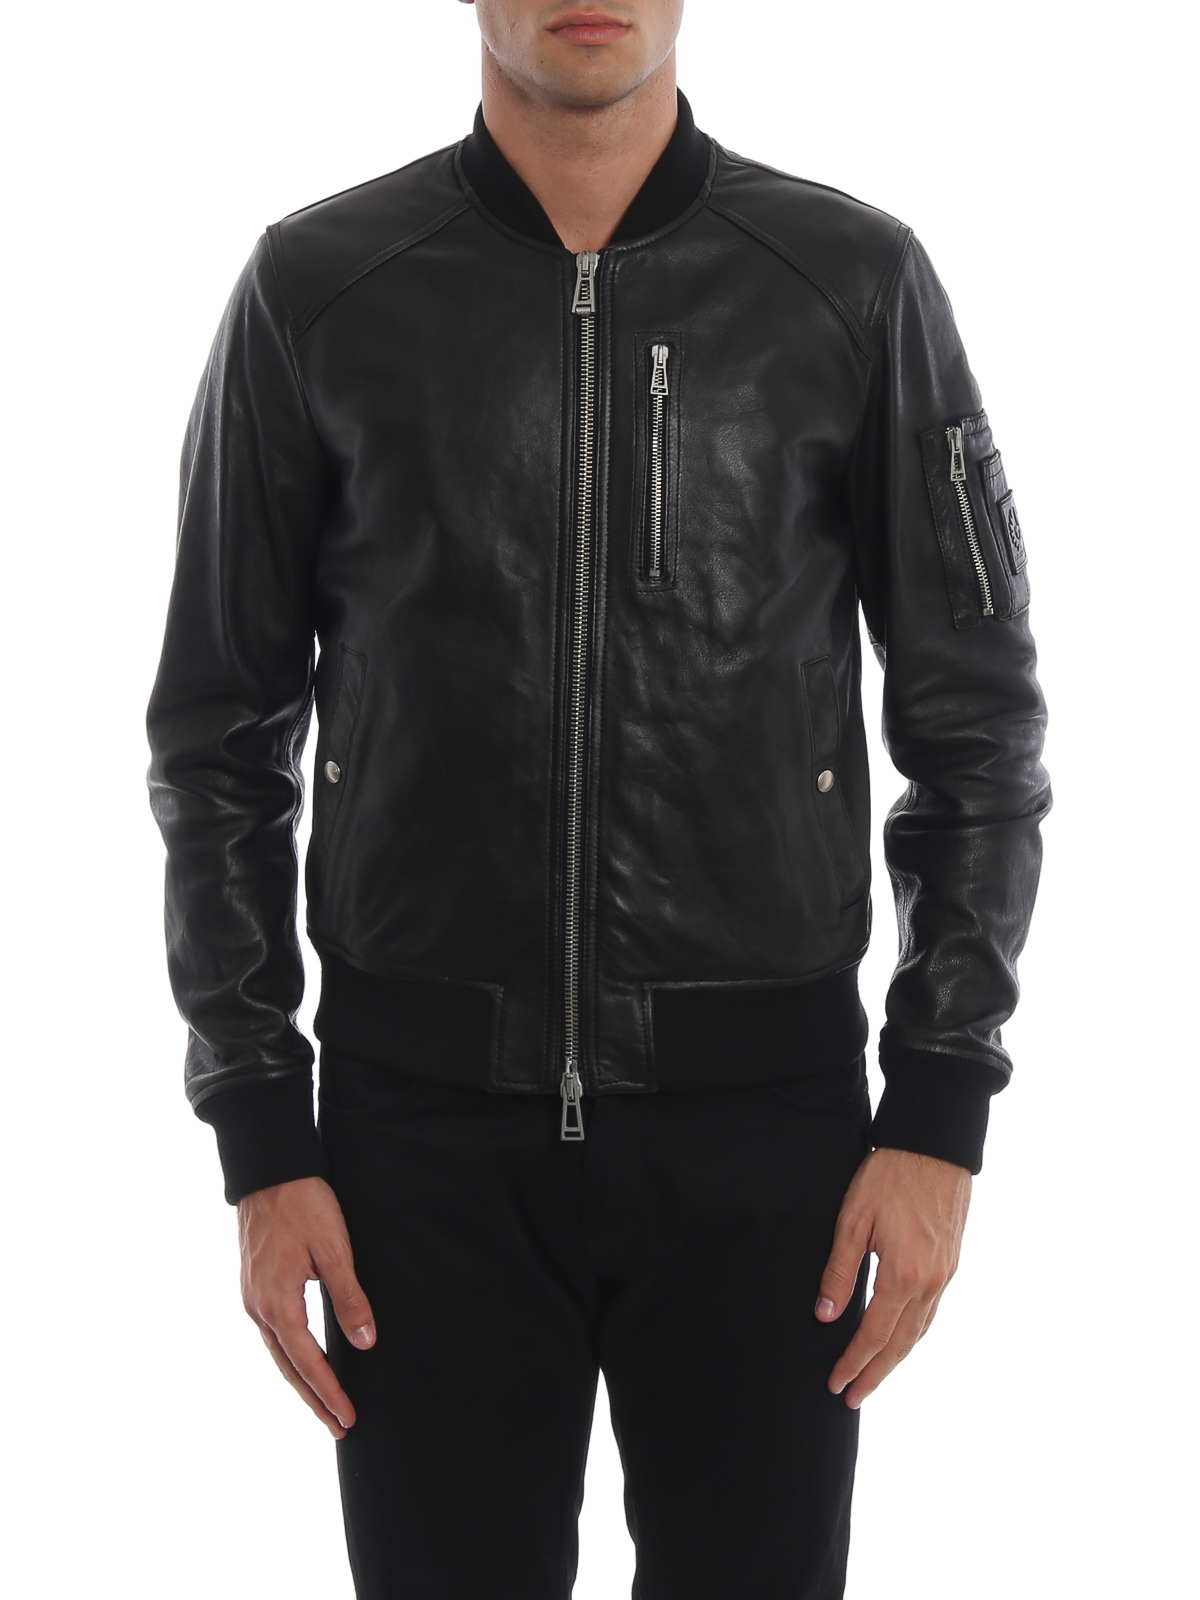 Leather jacket Belstaff - Clenshaw black soft nappa bomber jacket ...